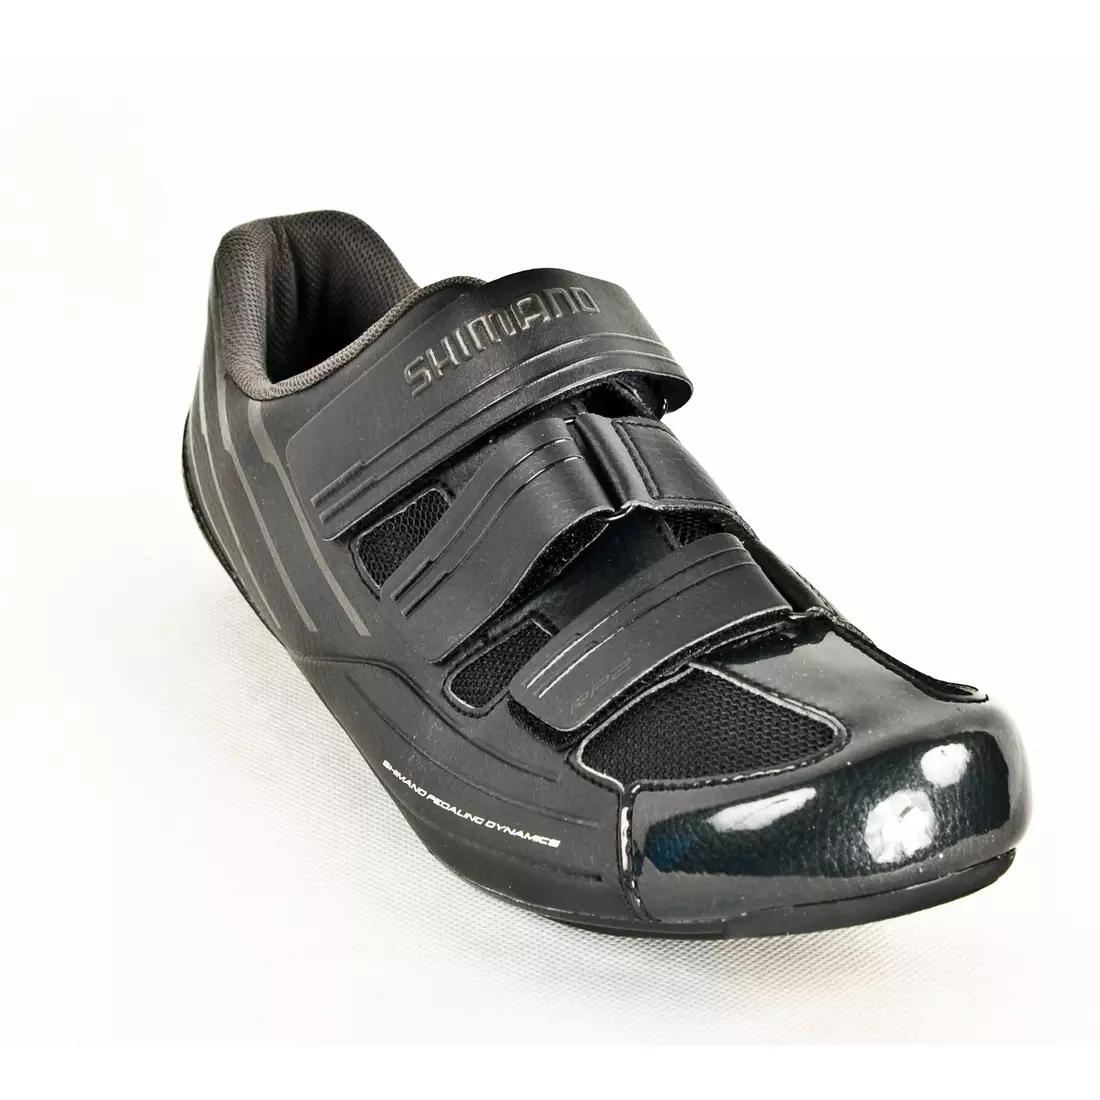 SHIMANO SH-RP200SL - men's road cycling shoes, color: black